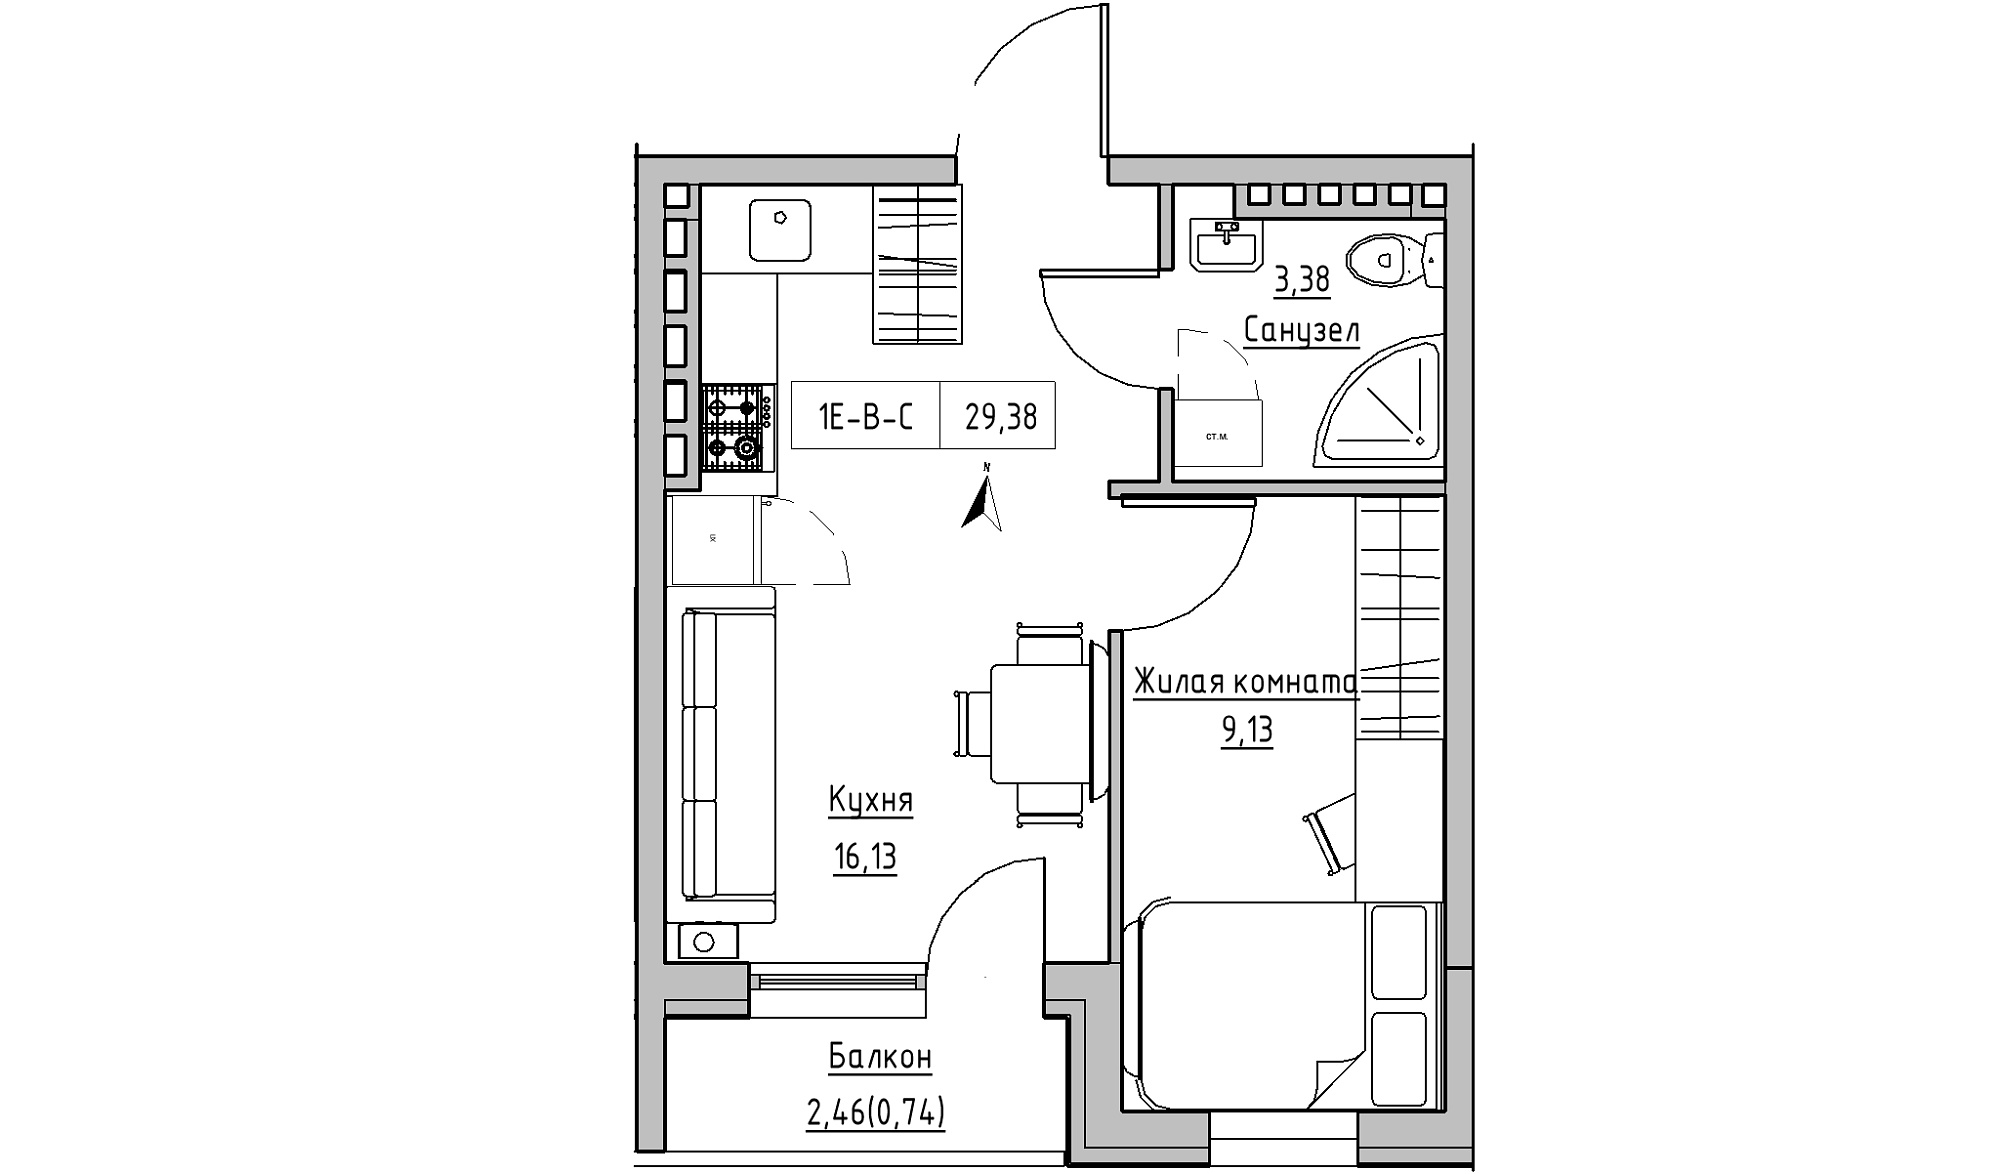 Planning 1-rm flats area 29.38m2, KS-024-05/0007.